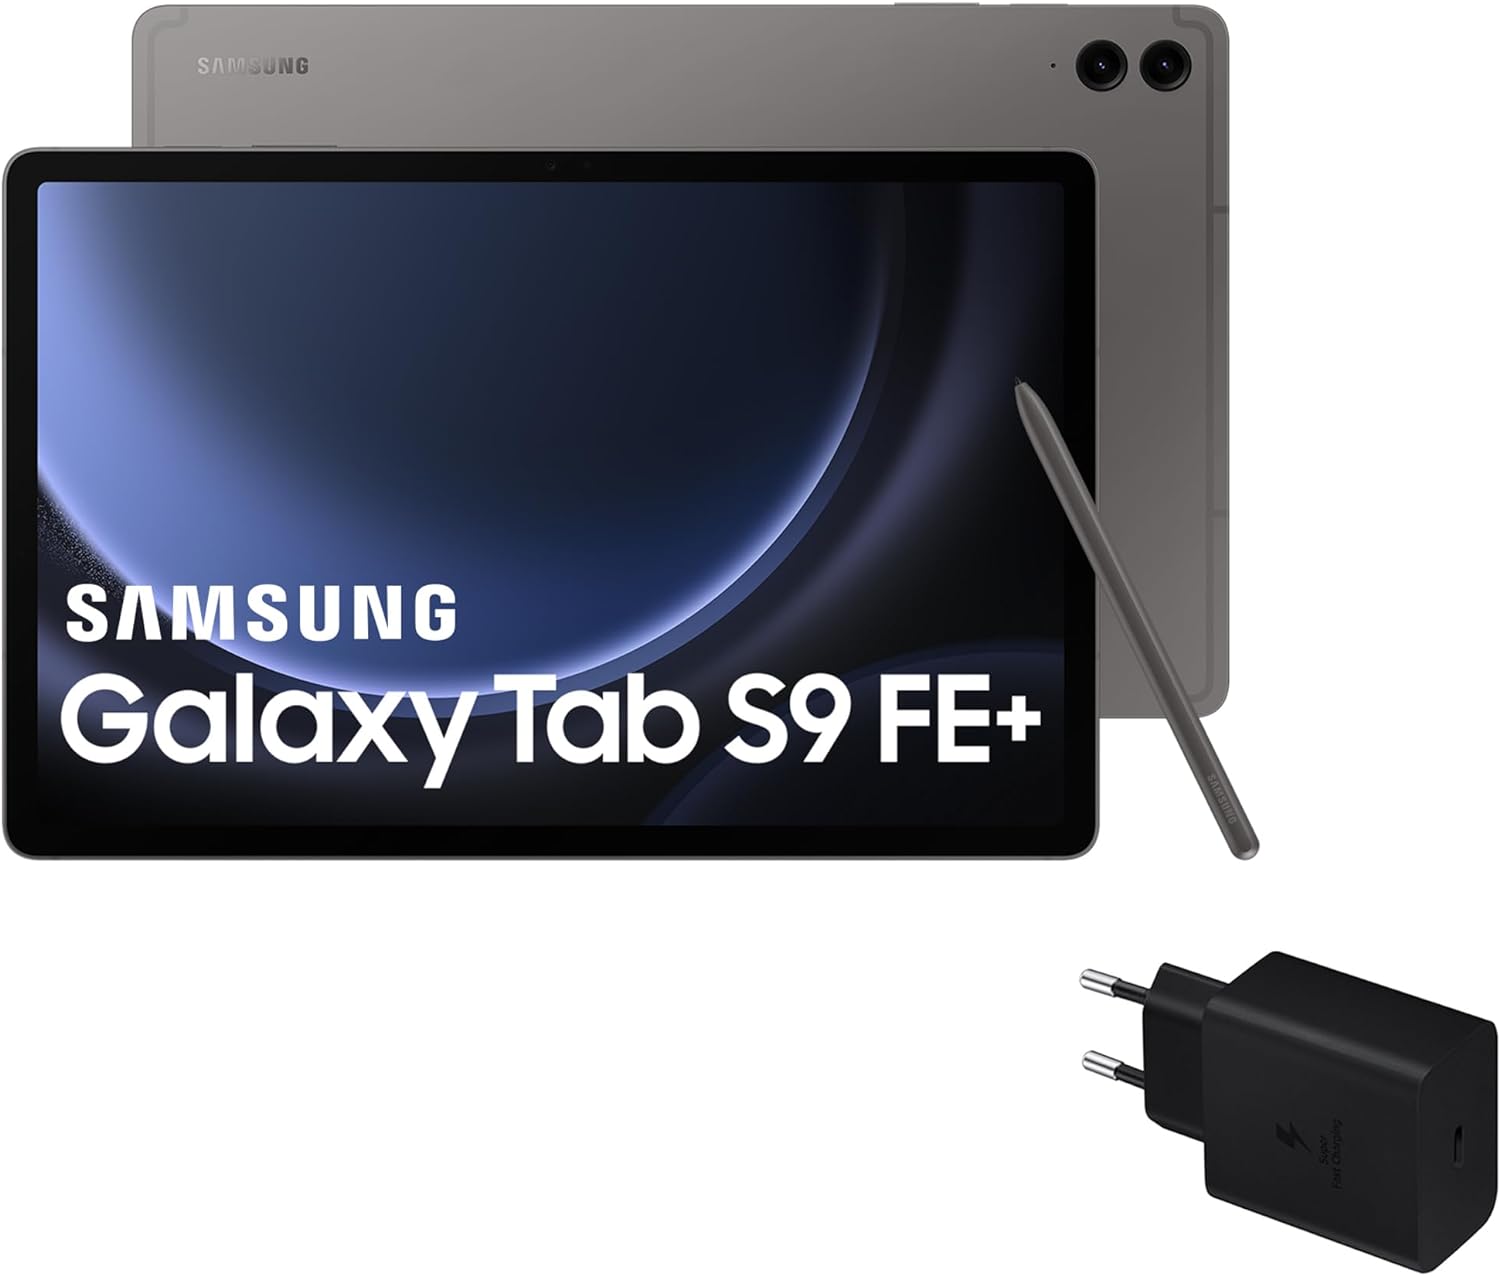 Samsung Galaxy Tab S9 FE+ vs. Samsung Galaxy Tab S9 vs. Samsung Galaxy Tab S9 FE